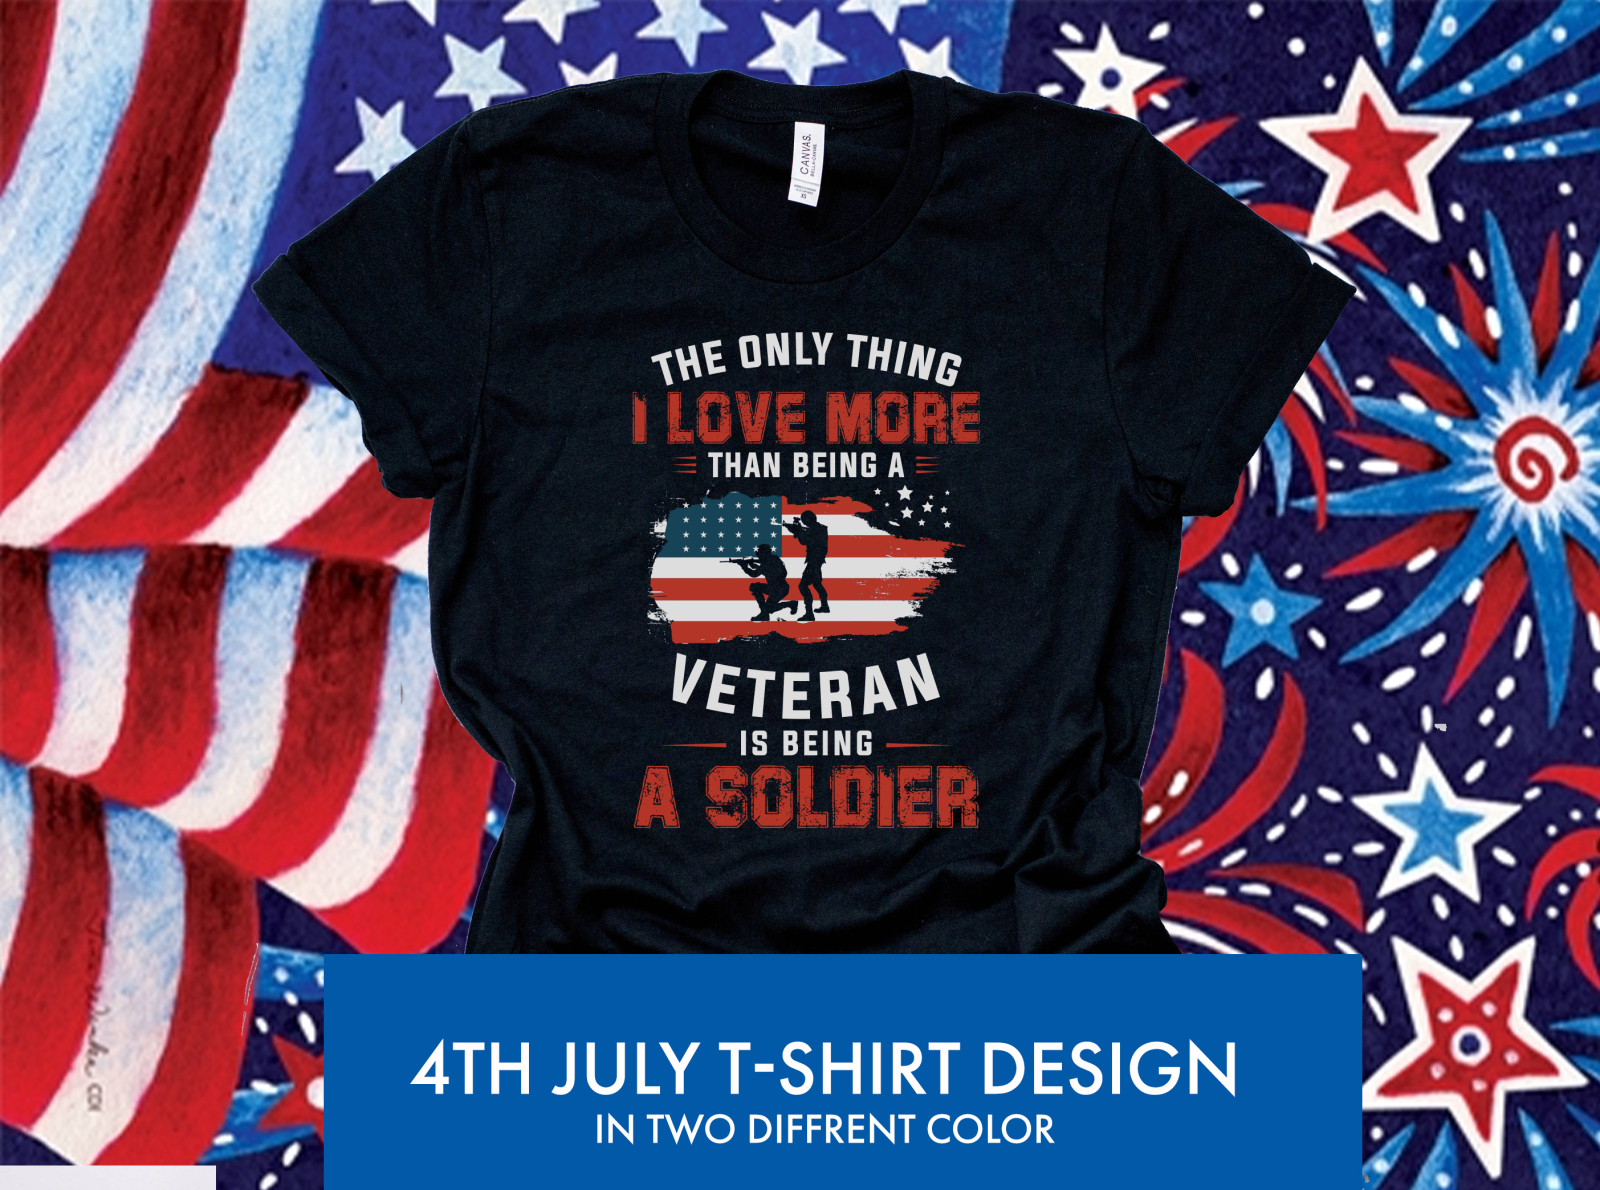 Buy > july t shirt design > in stock